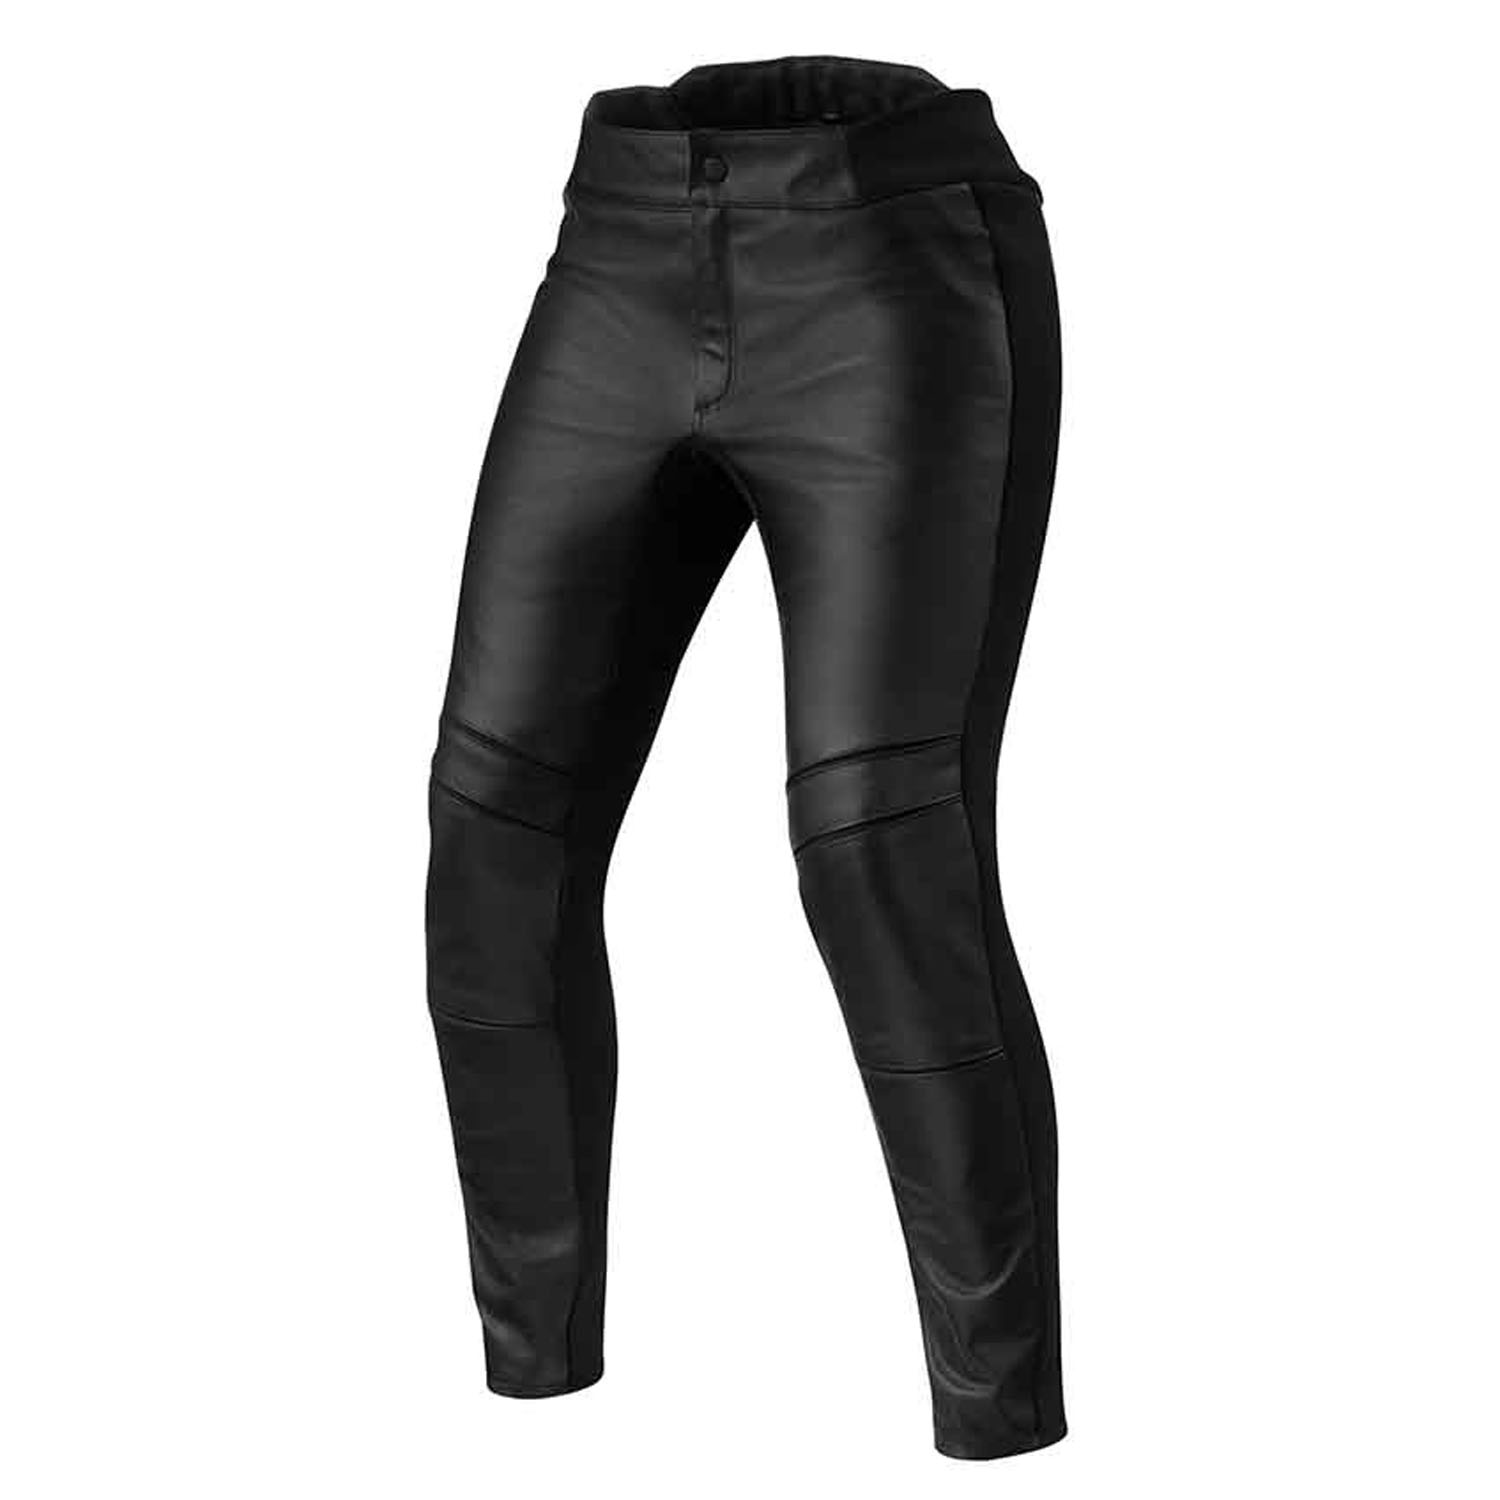 Image of EU REV'IT! Maci Ladies Black Standard Motorcycle Pants Taille 42